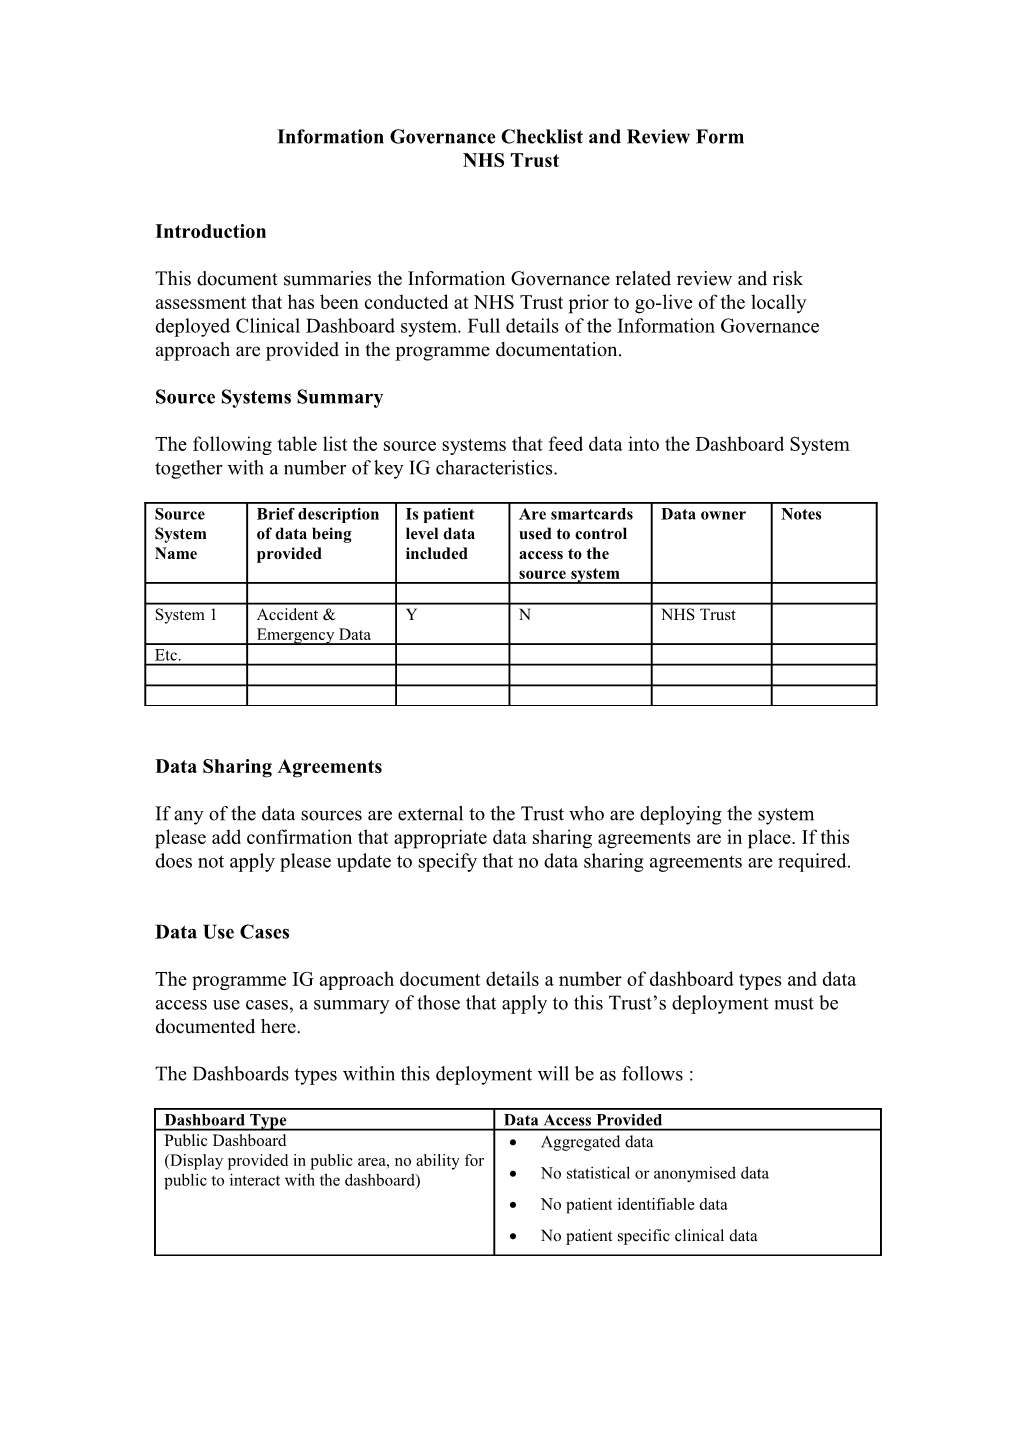 IG Checklist and Review Form V01a